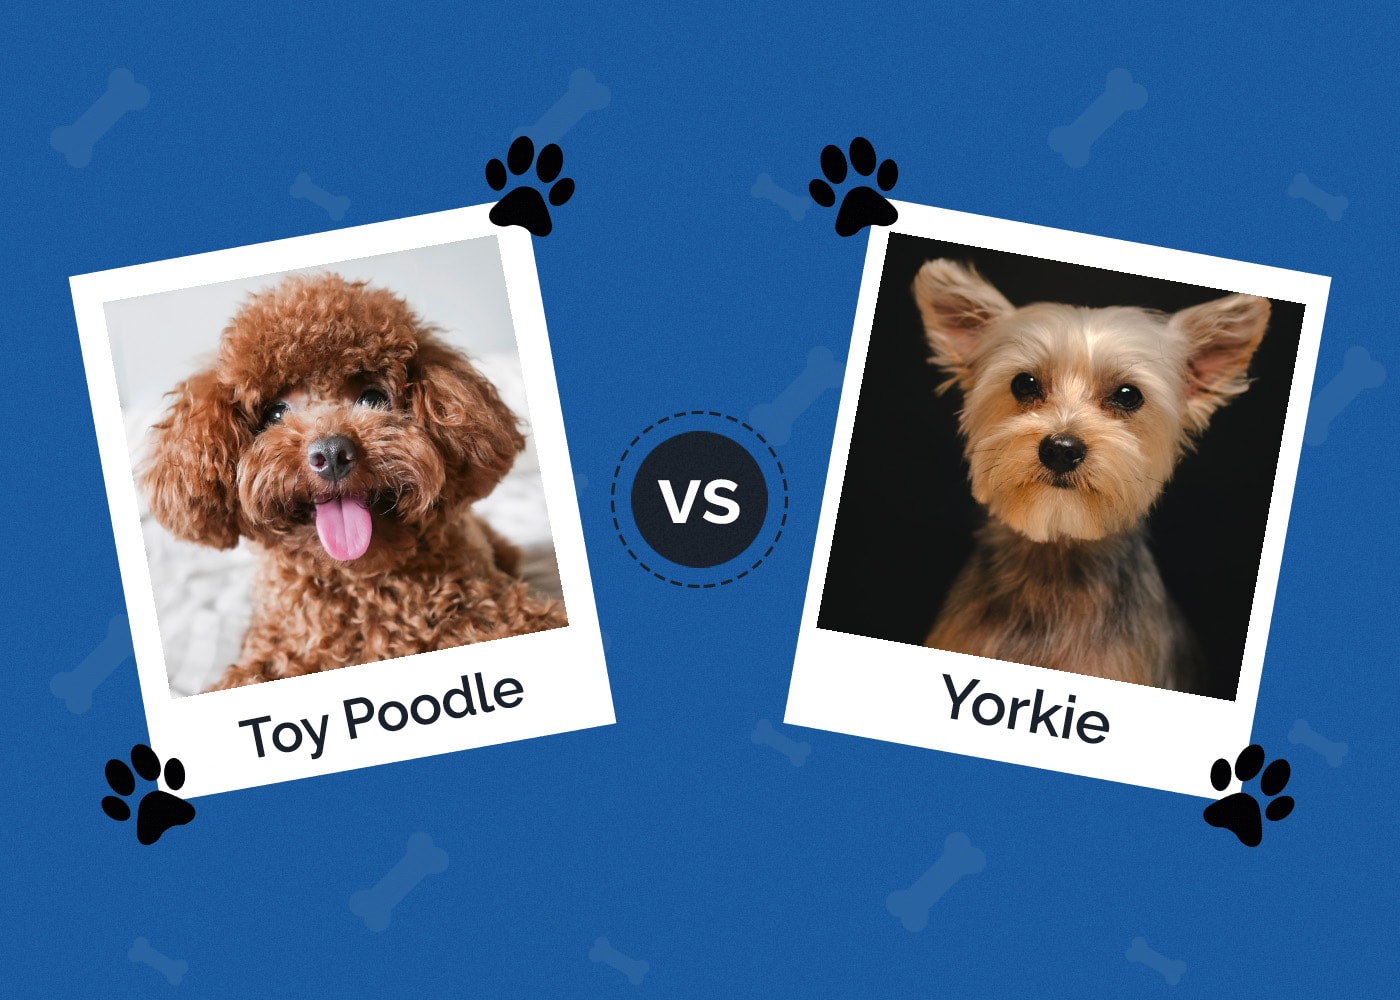 Toy Poodle vs Yorkie